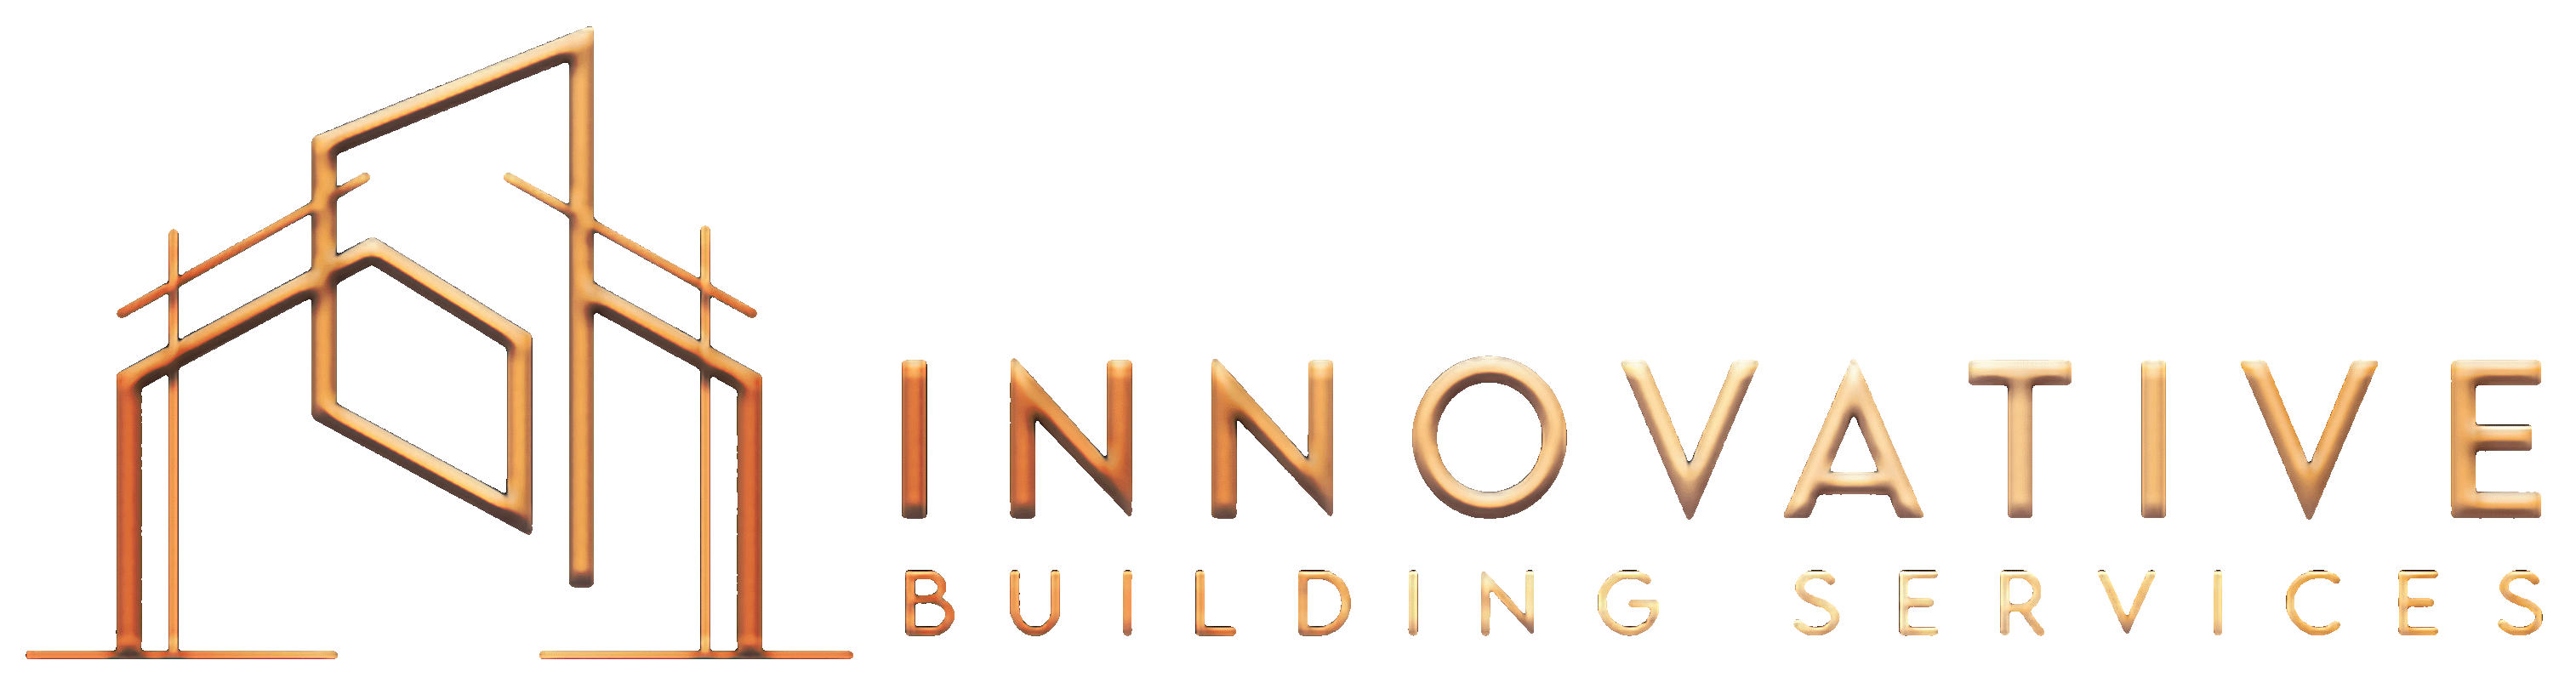 Innovative Building Services, Innovative Home Builders, Innovative Woodworks